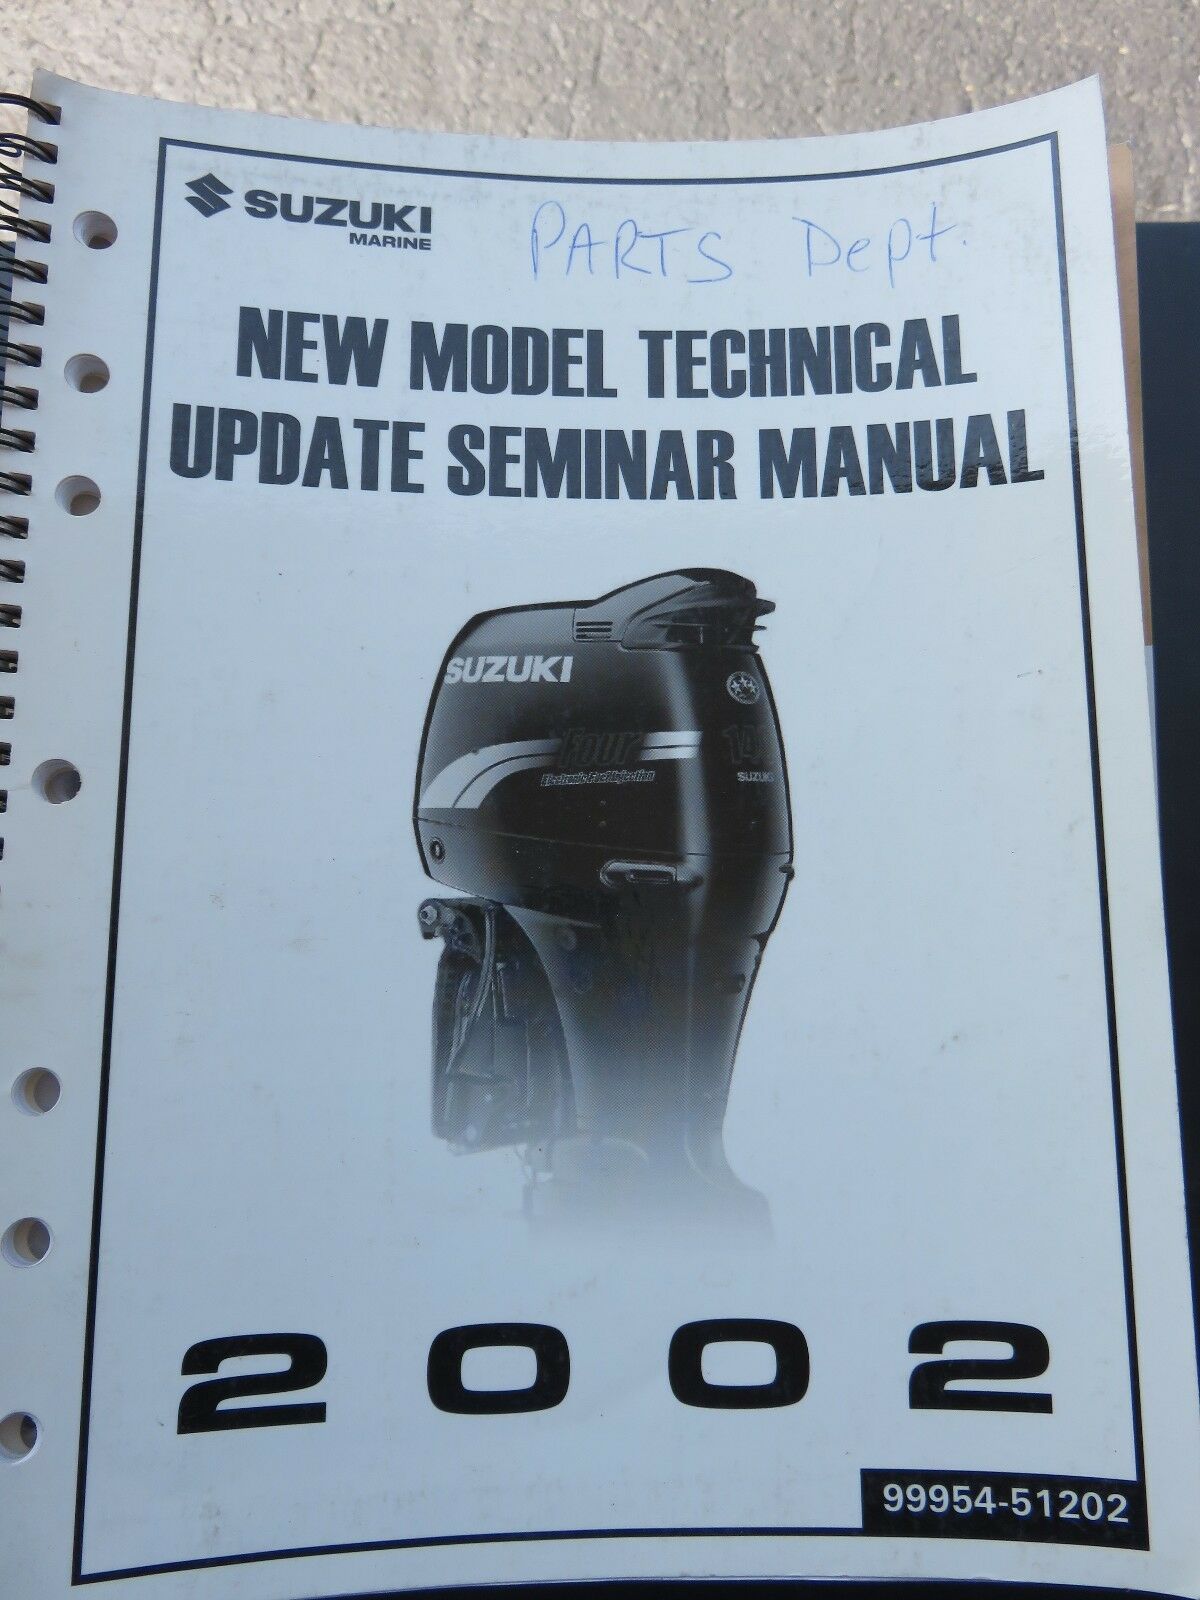 2002 Suzuki Marine New Model Technical Update Seminar Manual 99954-51202 - $6.04